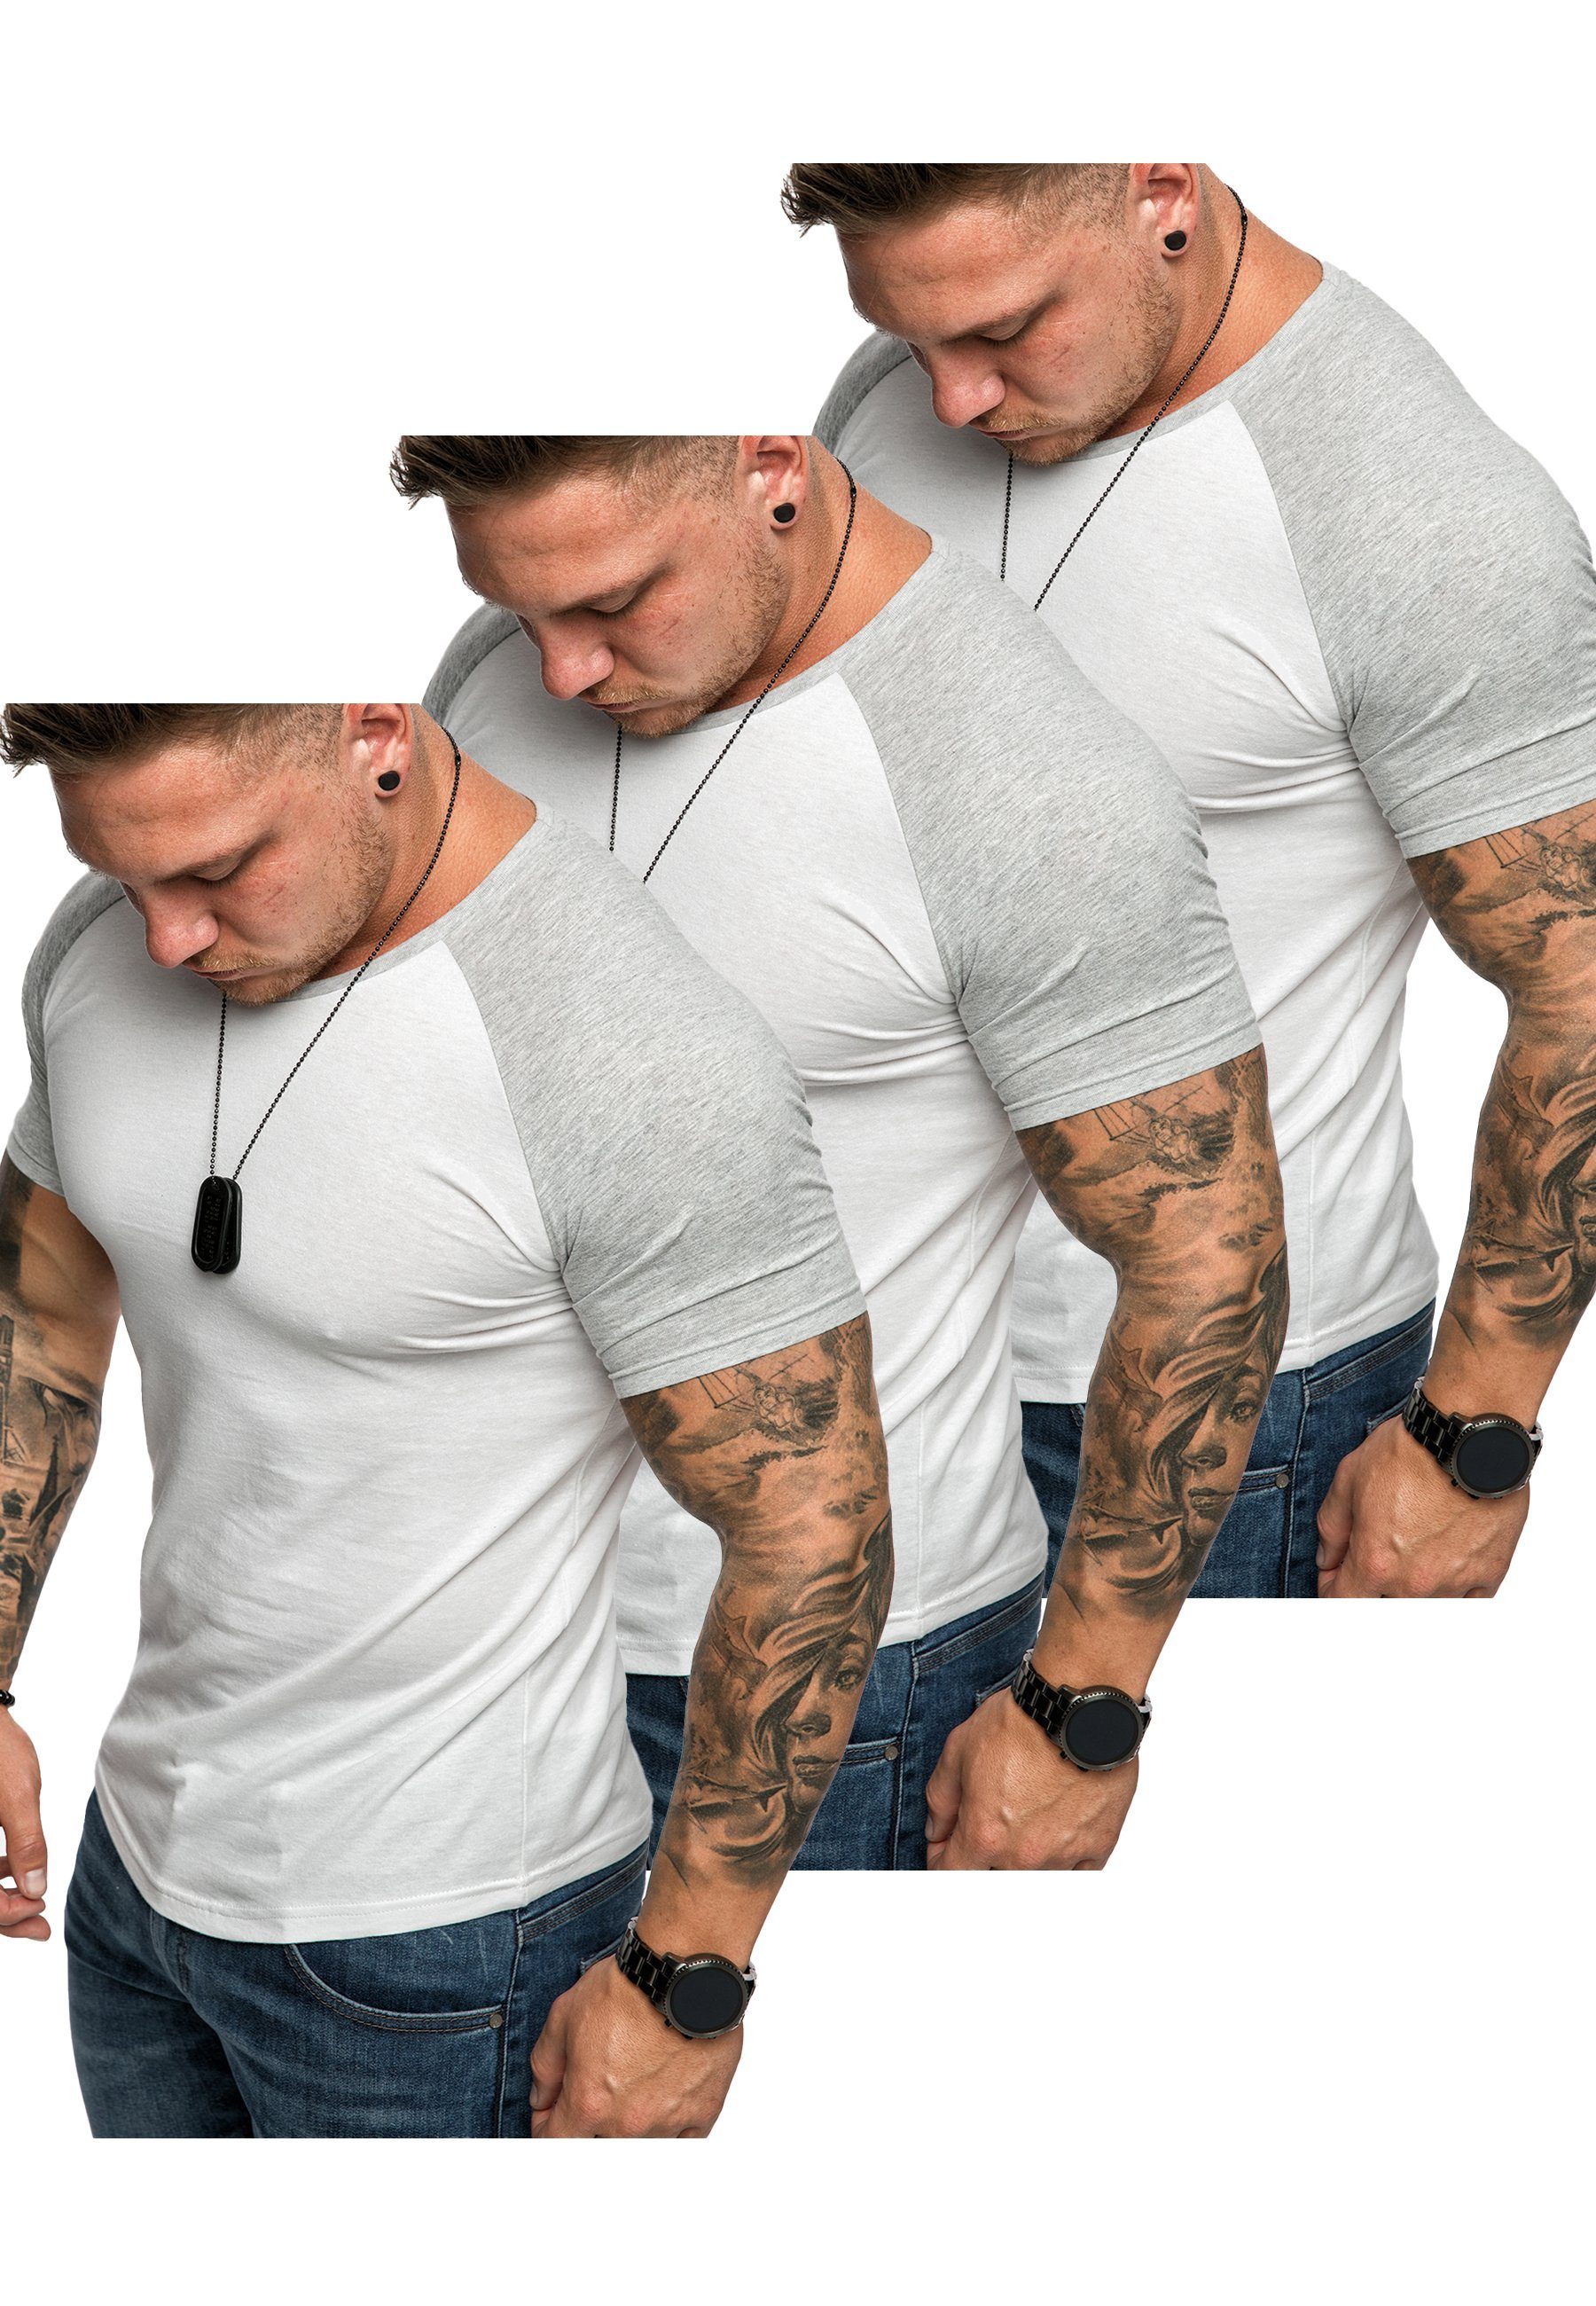 Oversize 3er-Pack Kontrast (3er-Pack) OMAHA Herren T-Shirt (3x Weiß/Grau) T-Shirts 3. Amaci&Sons Basic Raglan T-Shirt